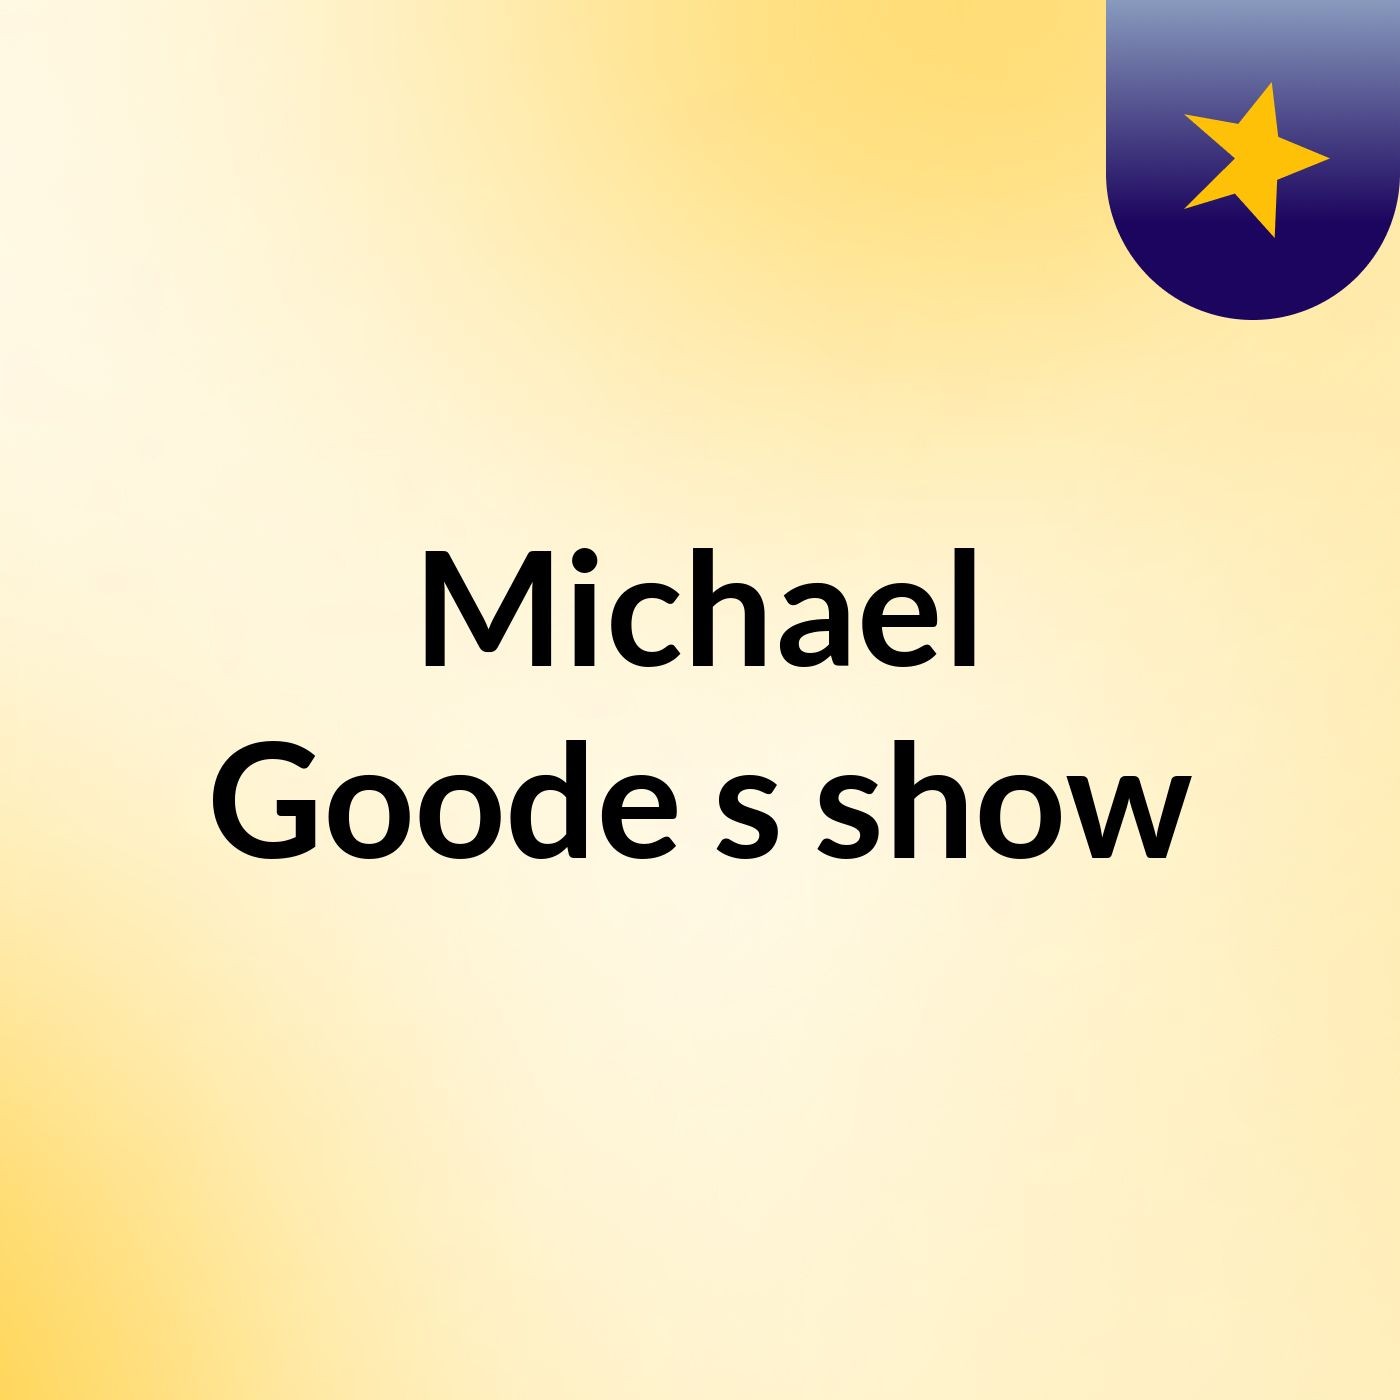 Episode 10 - Michael Goode's show